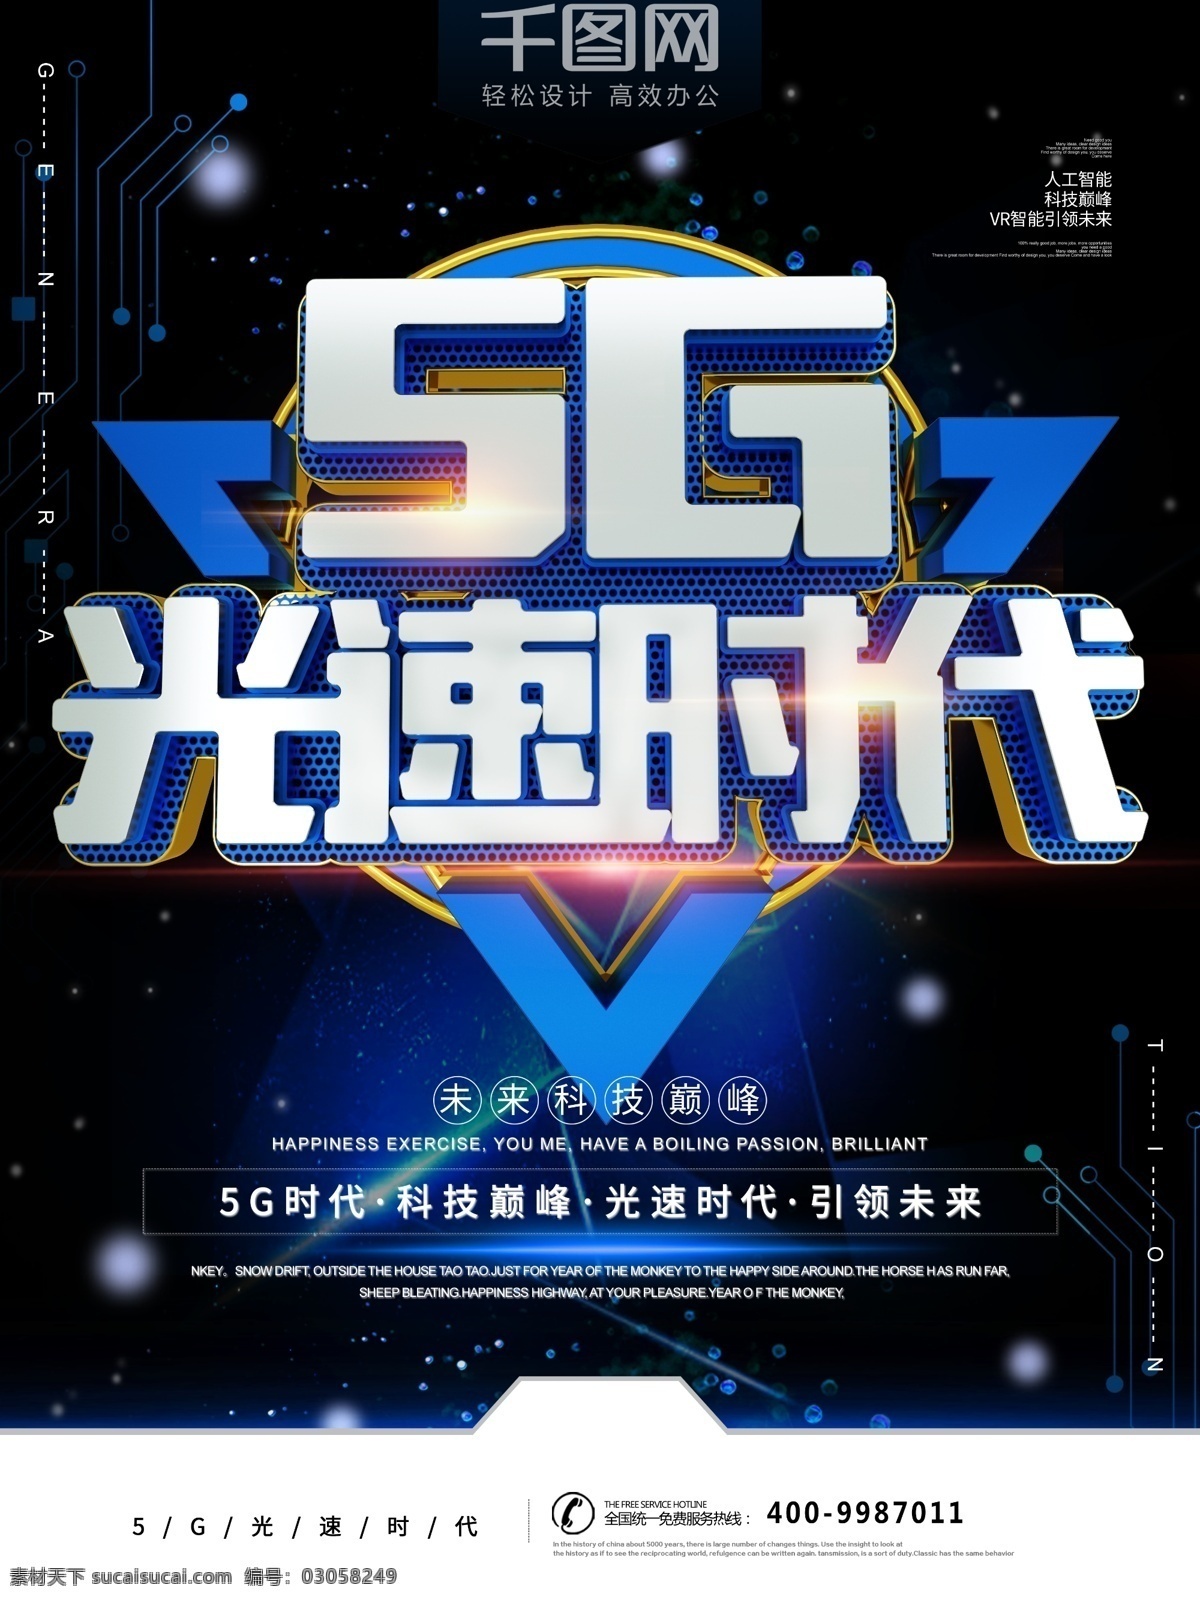 5g 光速 时代 蓝色 科技 感 商业 宣传海报 5g新时代 5g光速时代 5g时代 科技创新 未来